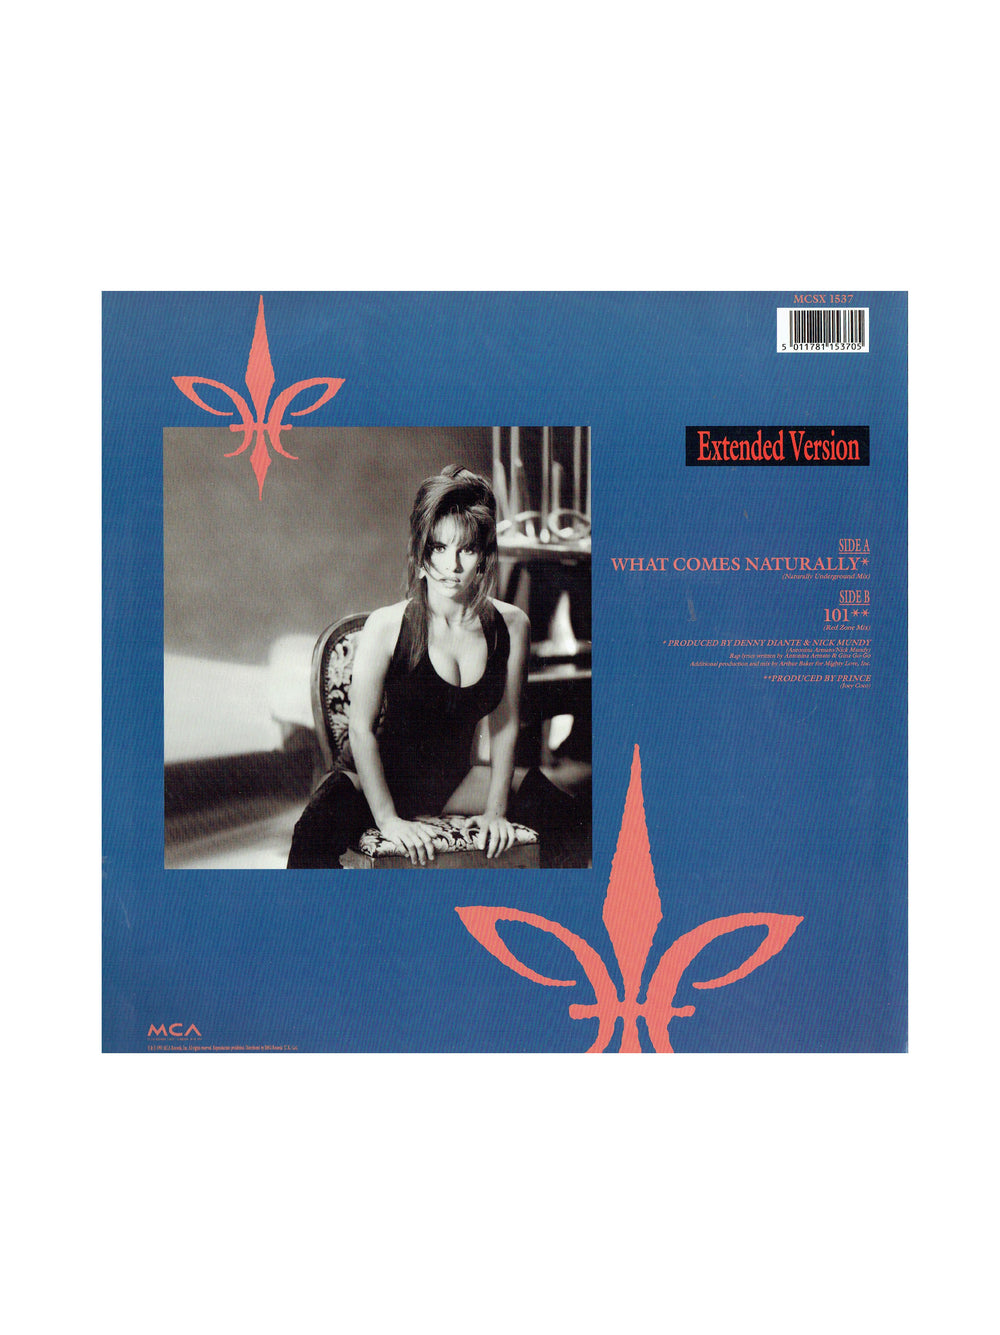 Prince – Sheena Easton Naturally Vinyl 12" Remix UK Preloved: 1991